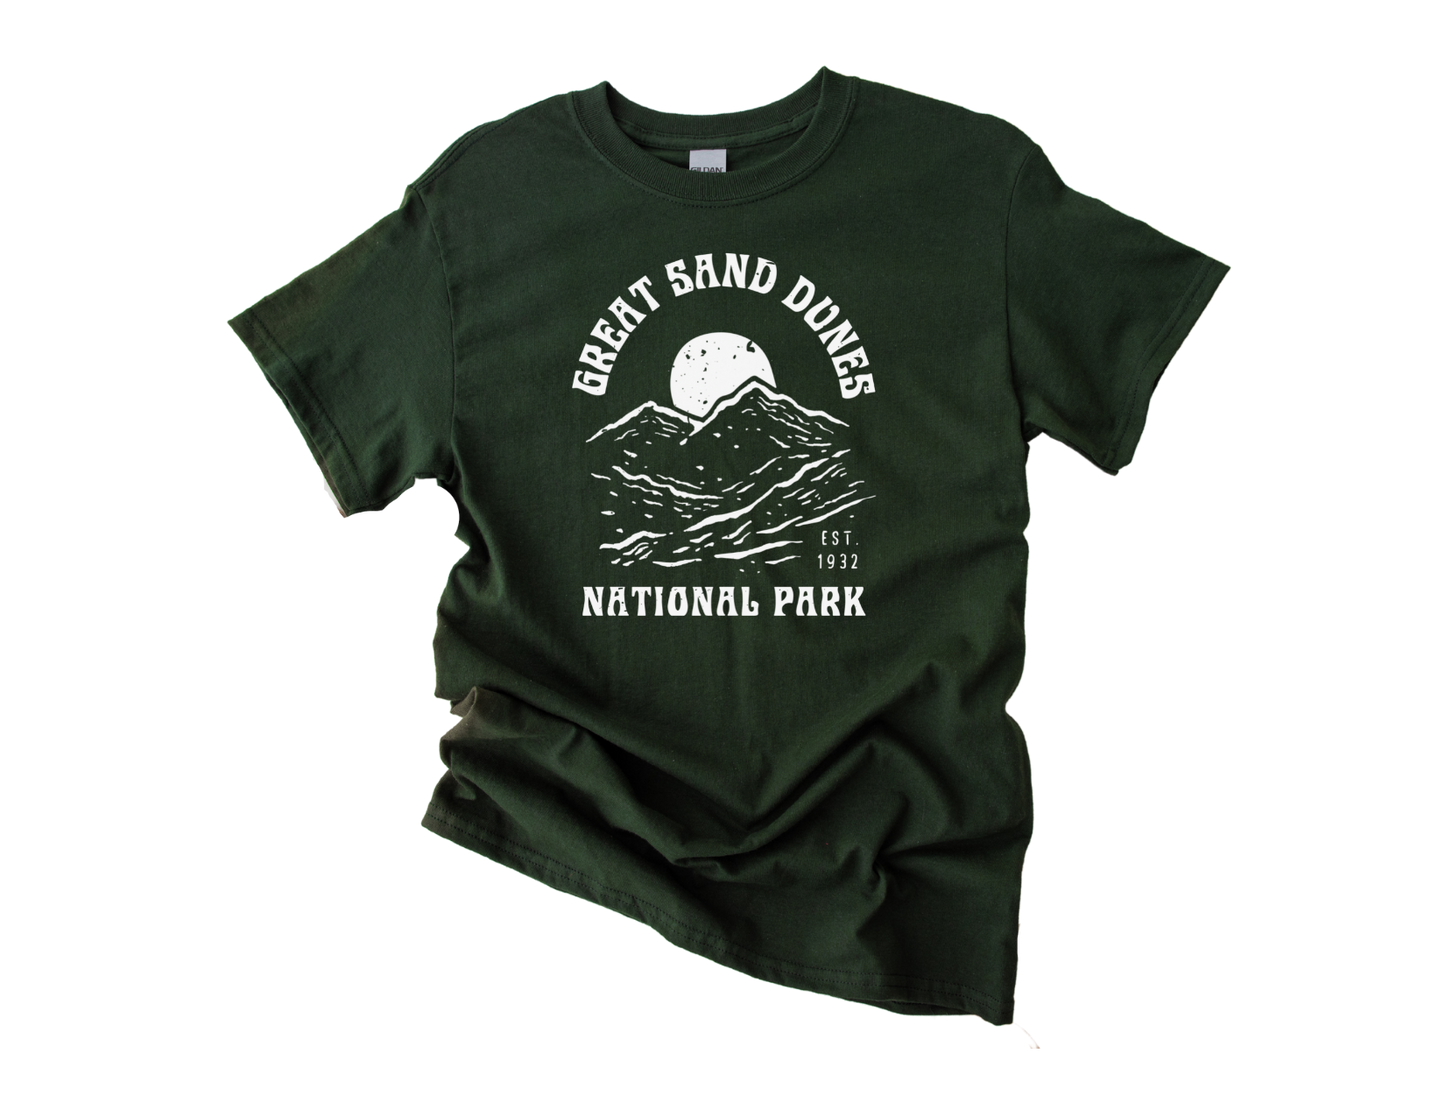 Great Sand Dunes National Park Unisex T-Shirt